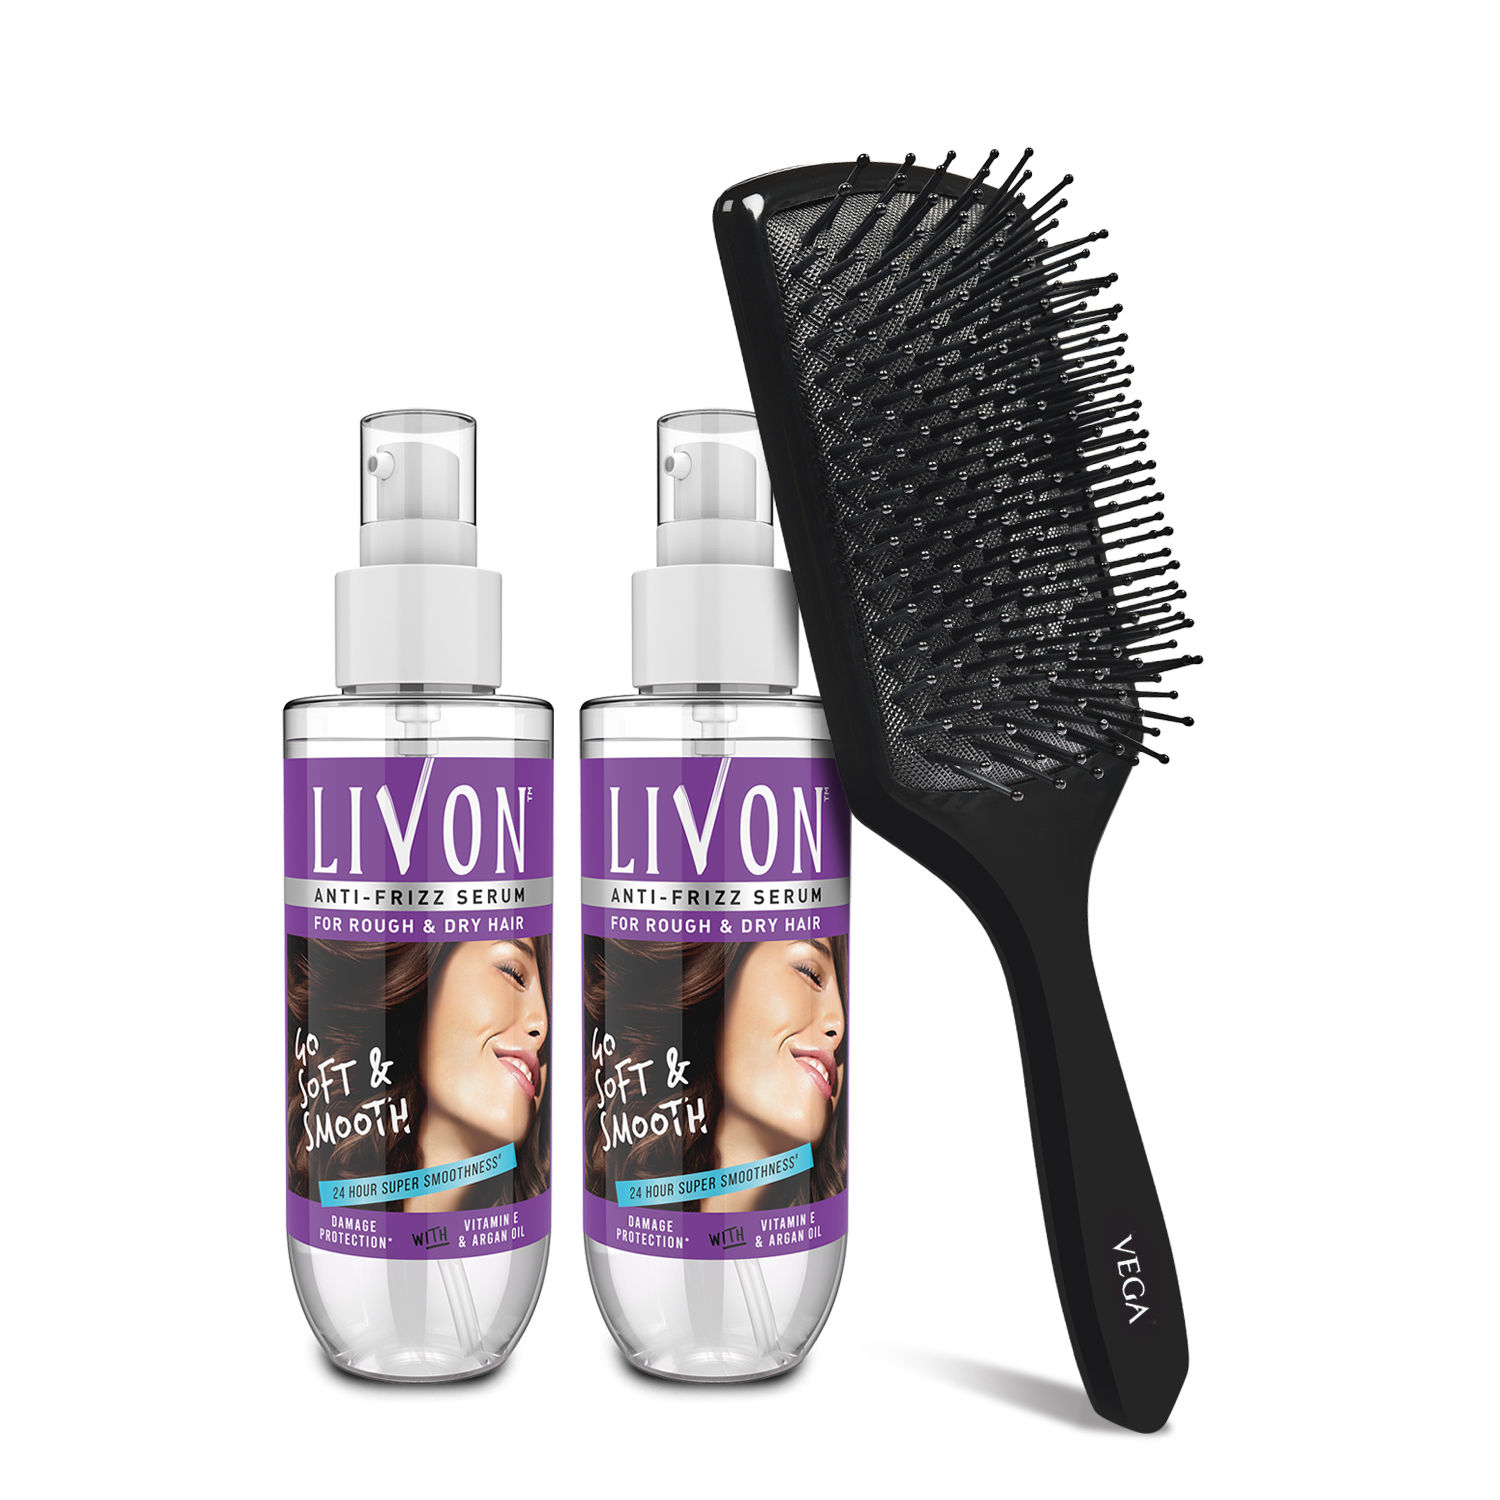 Livon Serum For Dry & Rough Hair For 24 Hour Frizz Free Hai ( Pack Of 2) +  Vega Hair Brush: Buy Livon Serum For Dry & Rough Hair For 24 Hour